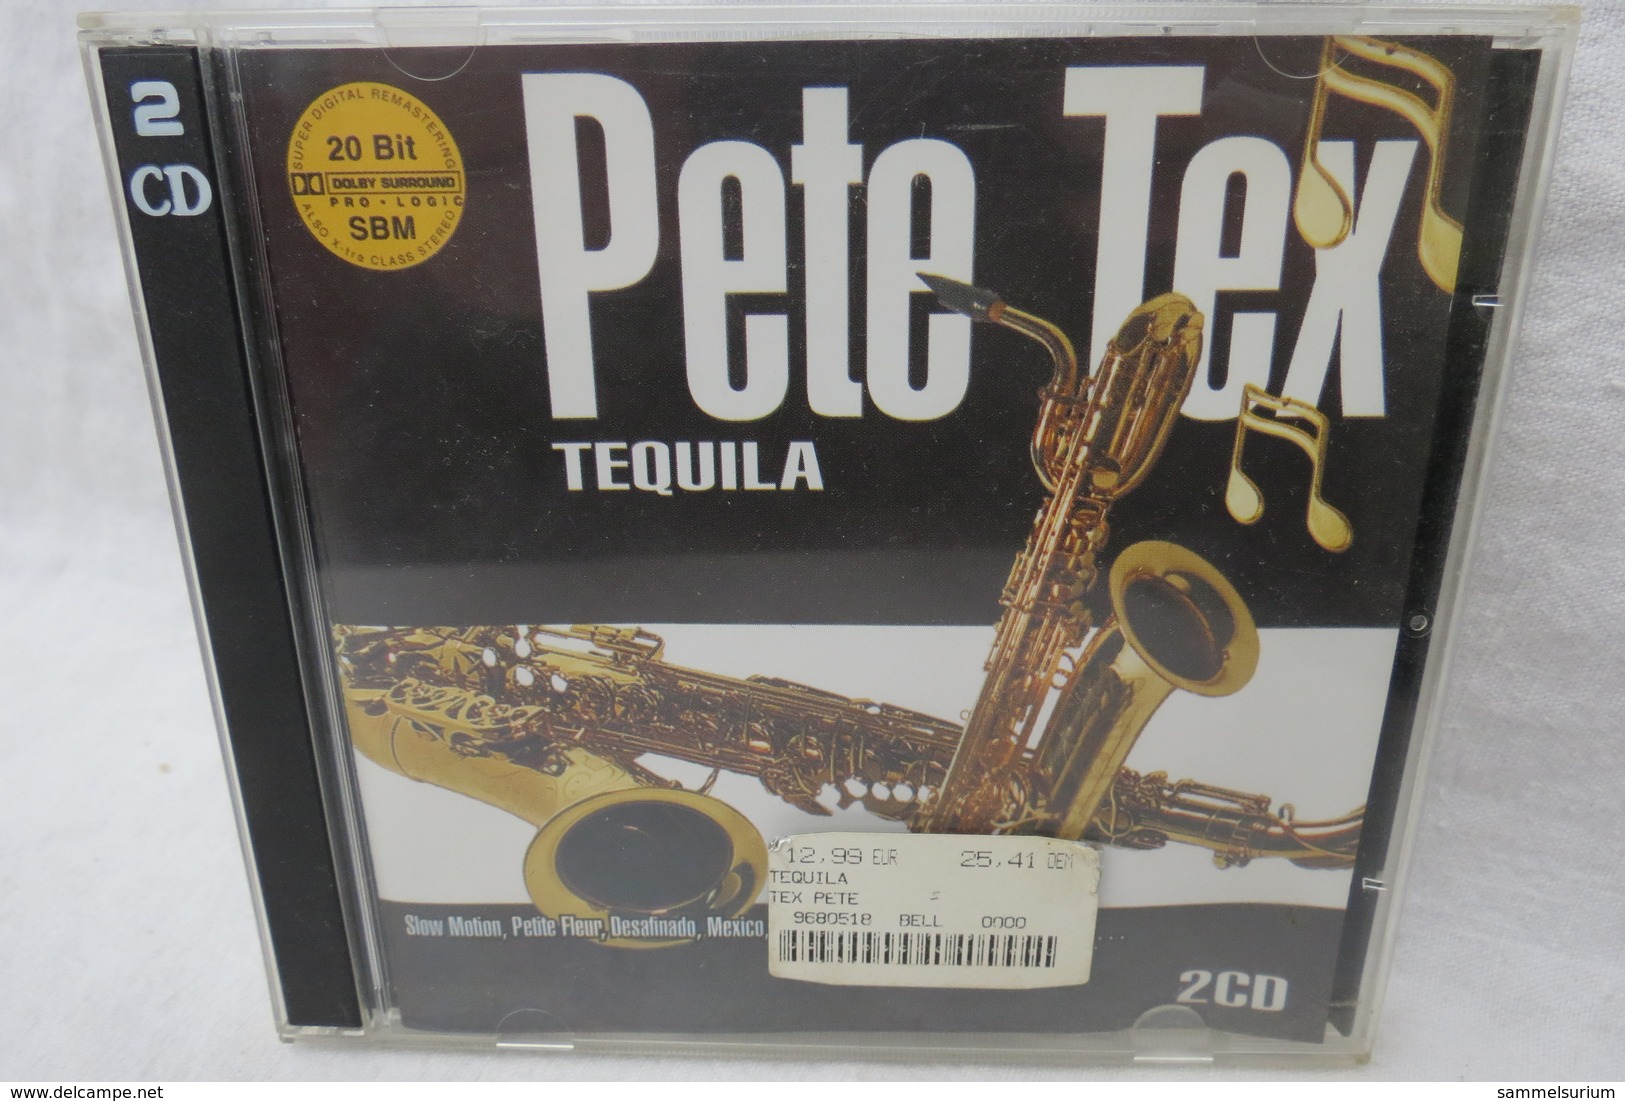 2 CDs "Pete Tex" Tequila - Instrumental